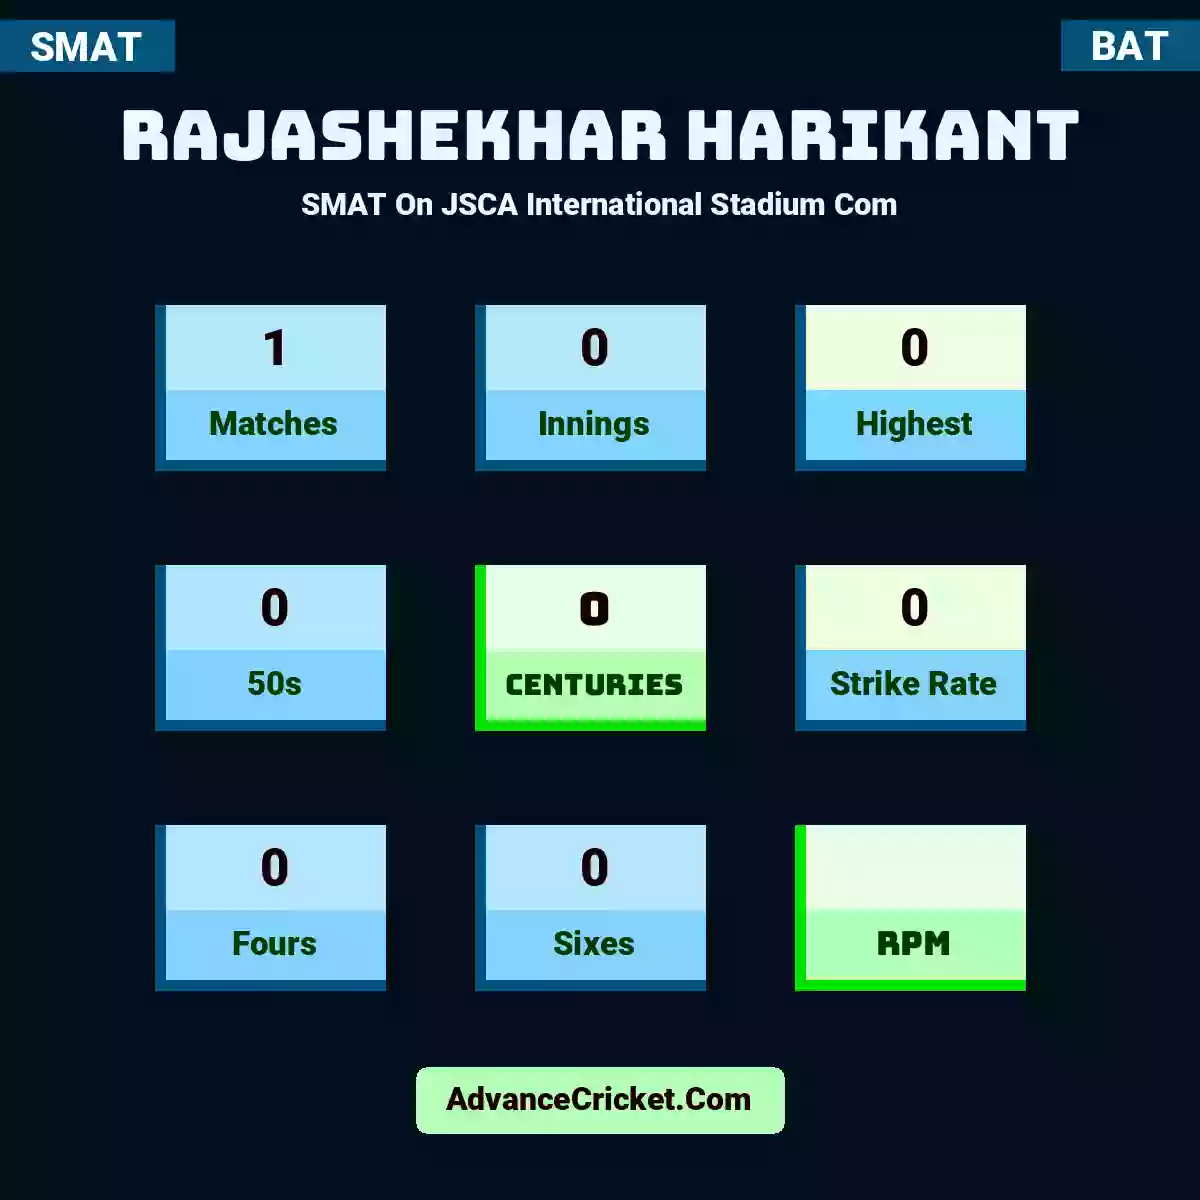 Rajashekhar Harikant SMAT  On JSCA International Stadium Com, Rajashekhar Harikant played 1 matches, scored 0 runs as highest, 0 half-centuries, and 0 centuries, with a strike rate of 0. R.Harikant hit 0 fours and 0 sixes.